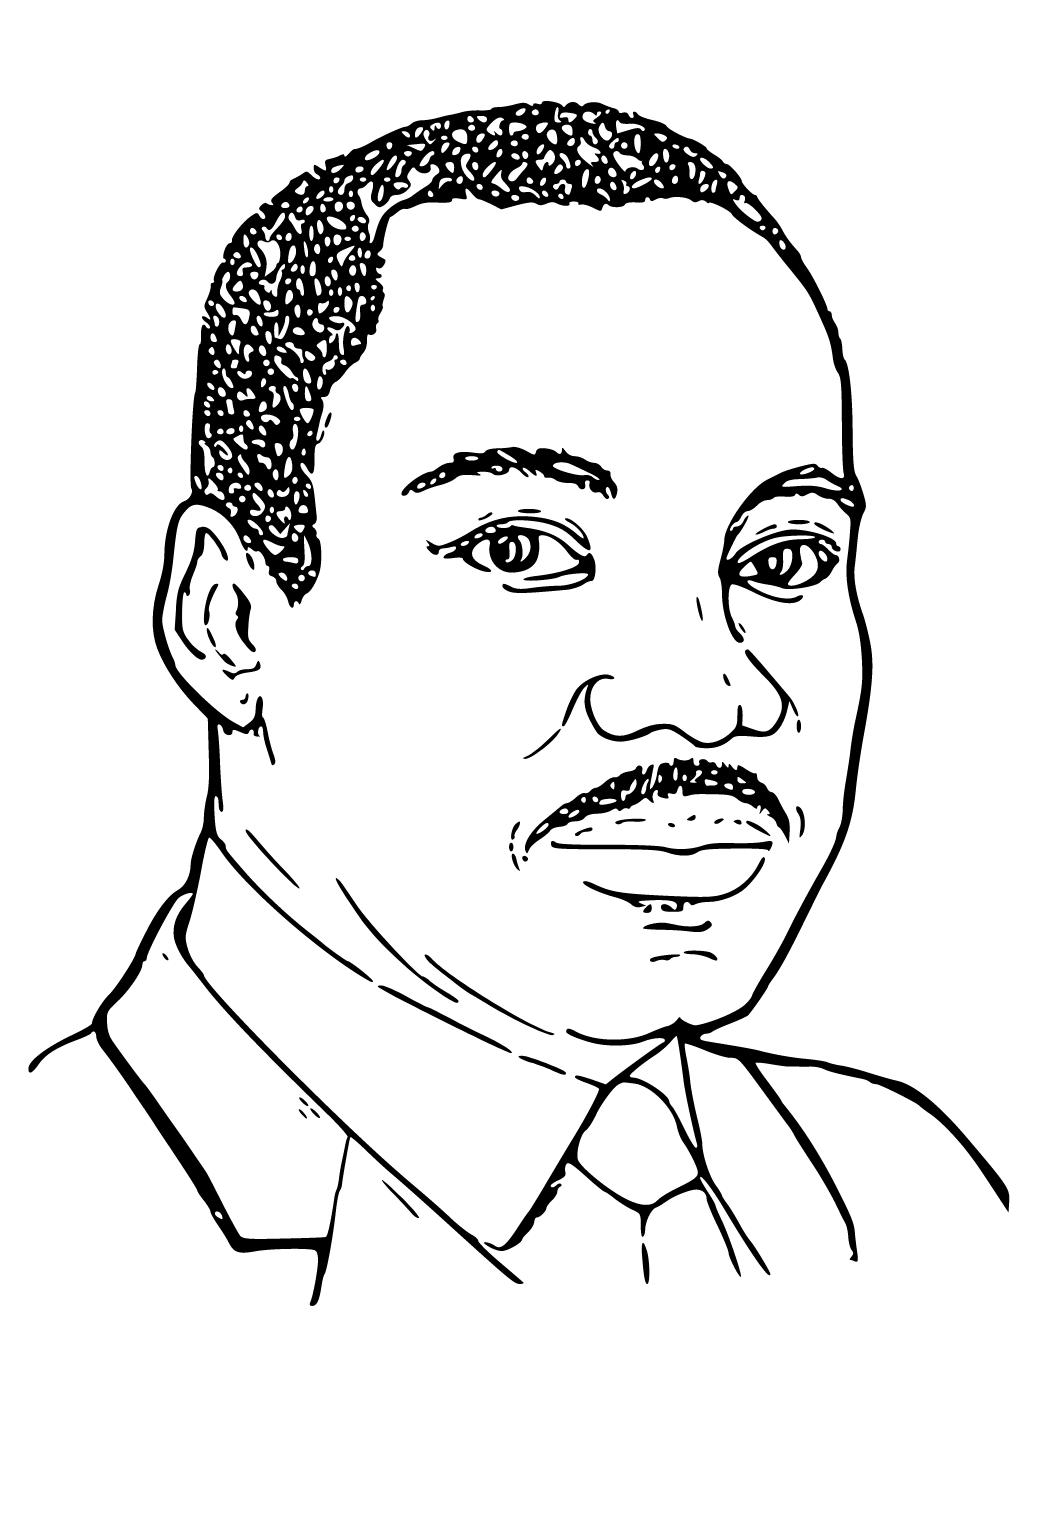 Martin Luther King Júnior